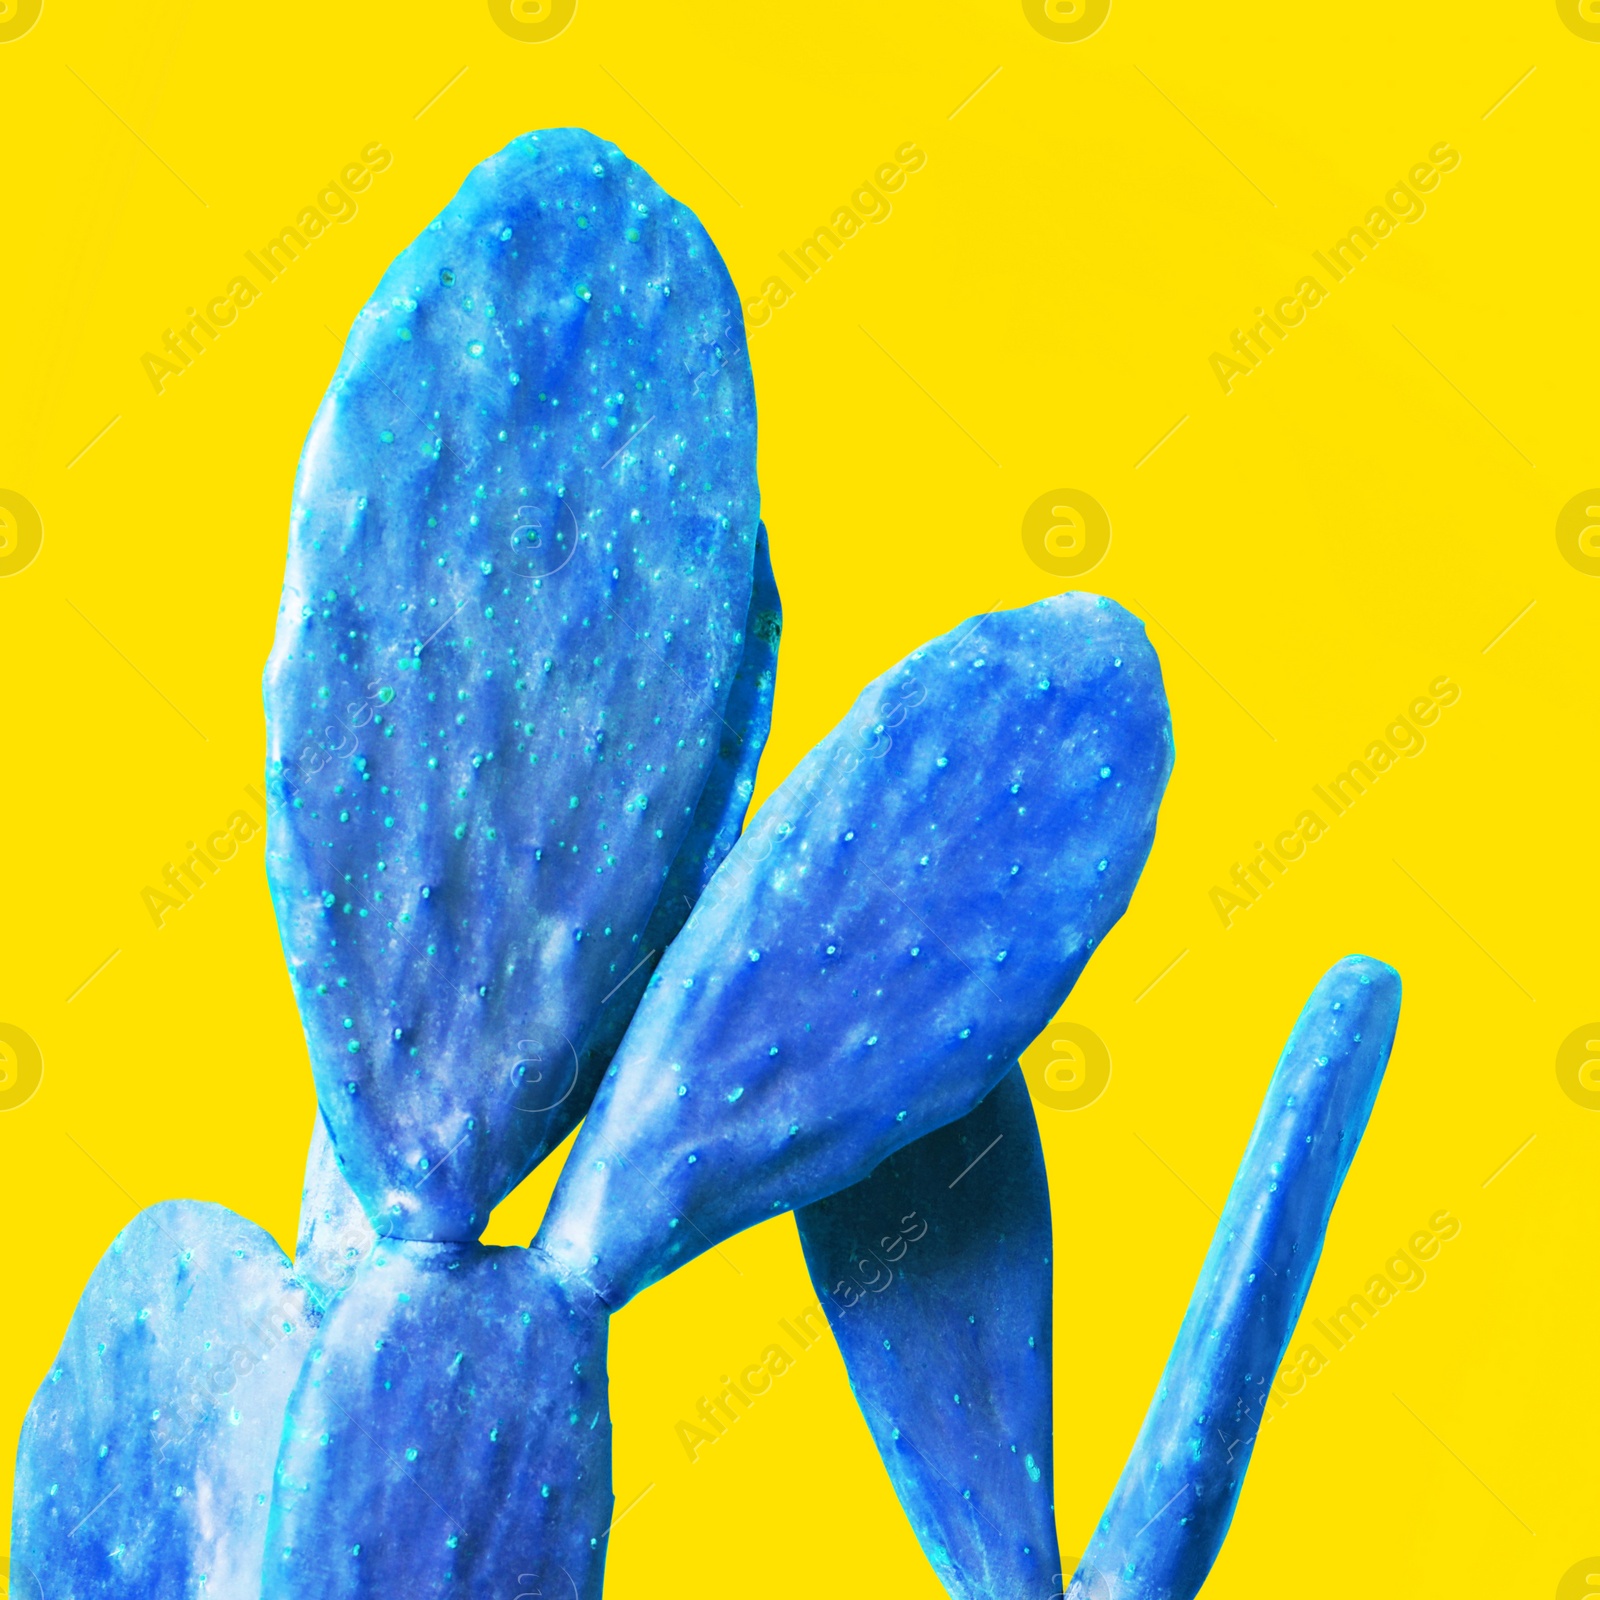 Image of Blue cactus on yellow background. Creative design